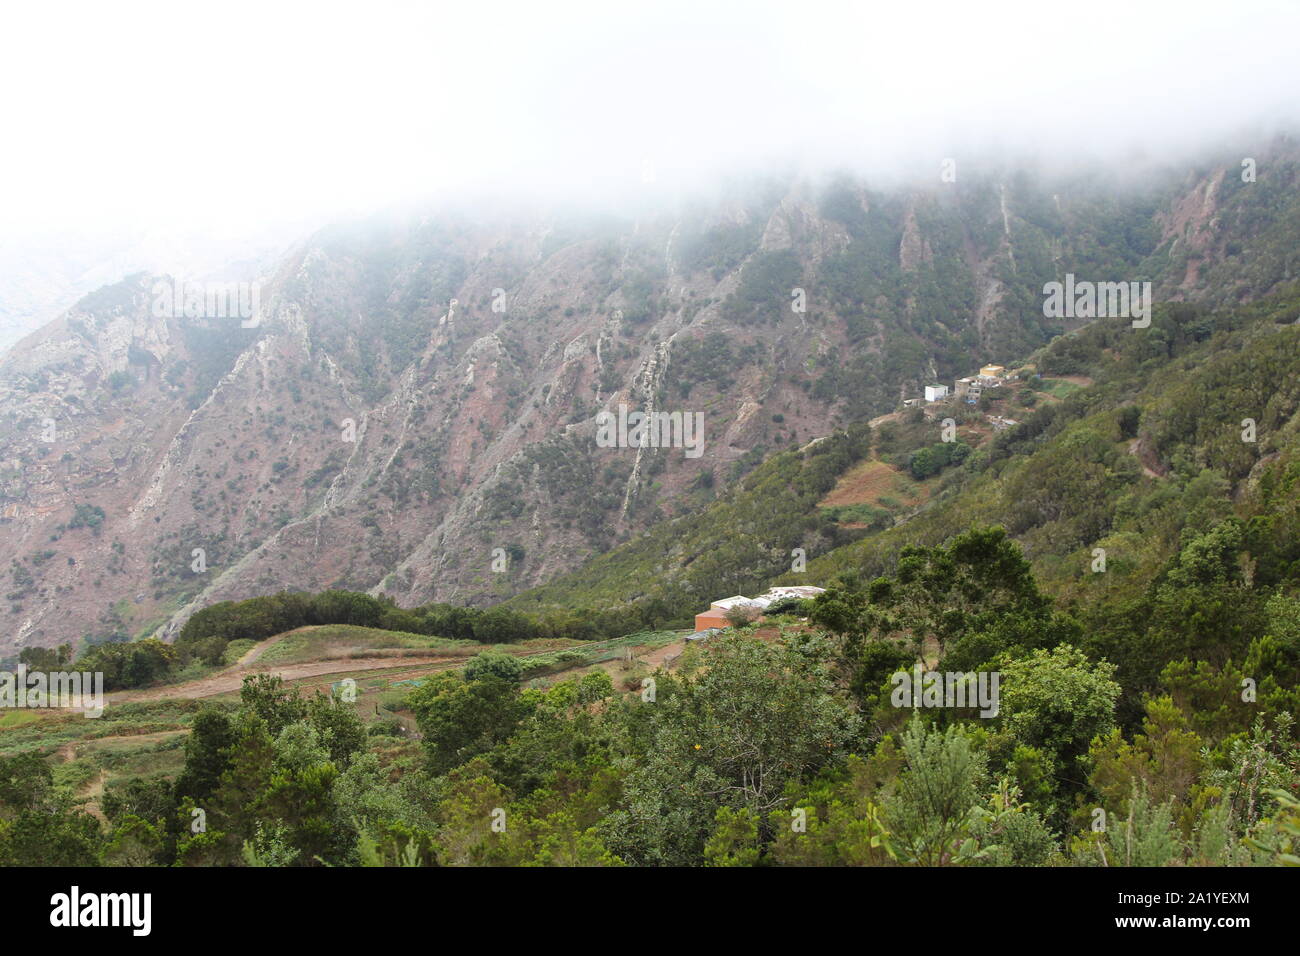 Green vs savanah, Top of Anaga Mountain Park drive, Tenerife, Canary Islands, Spain Stock Photo